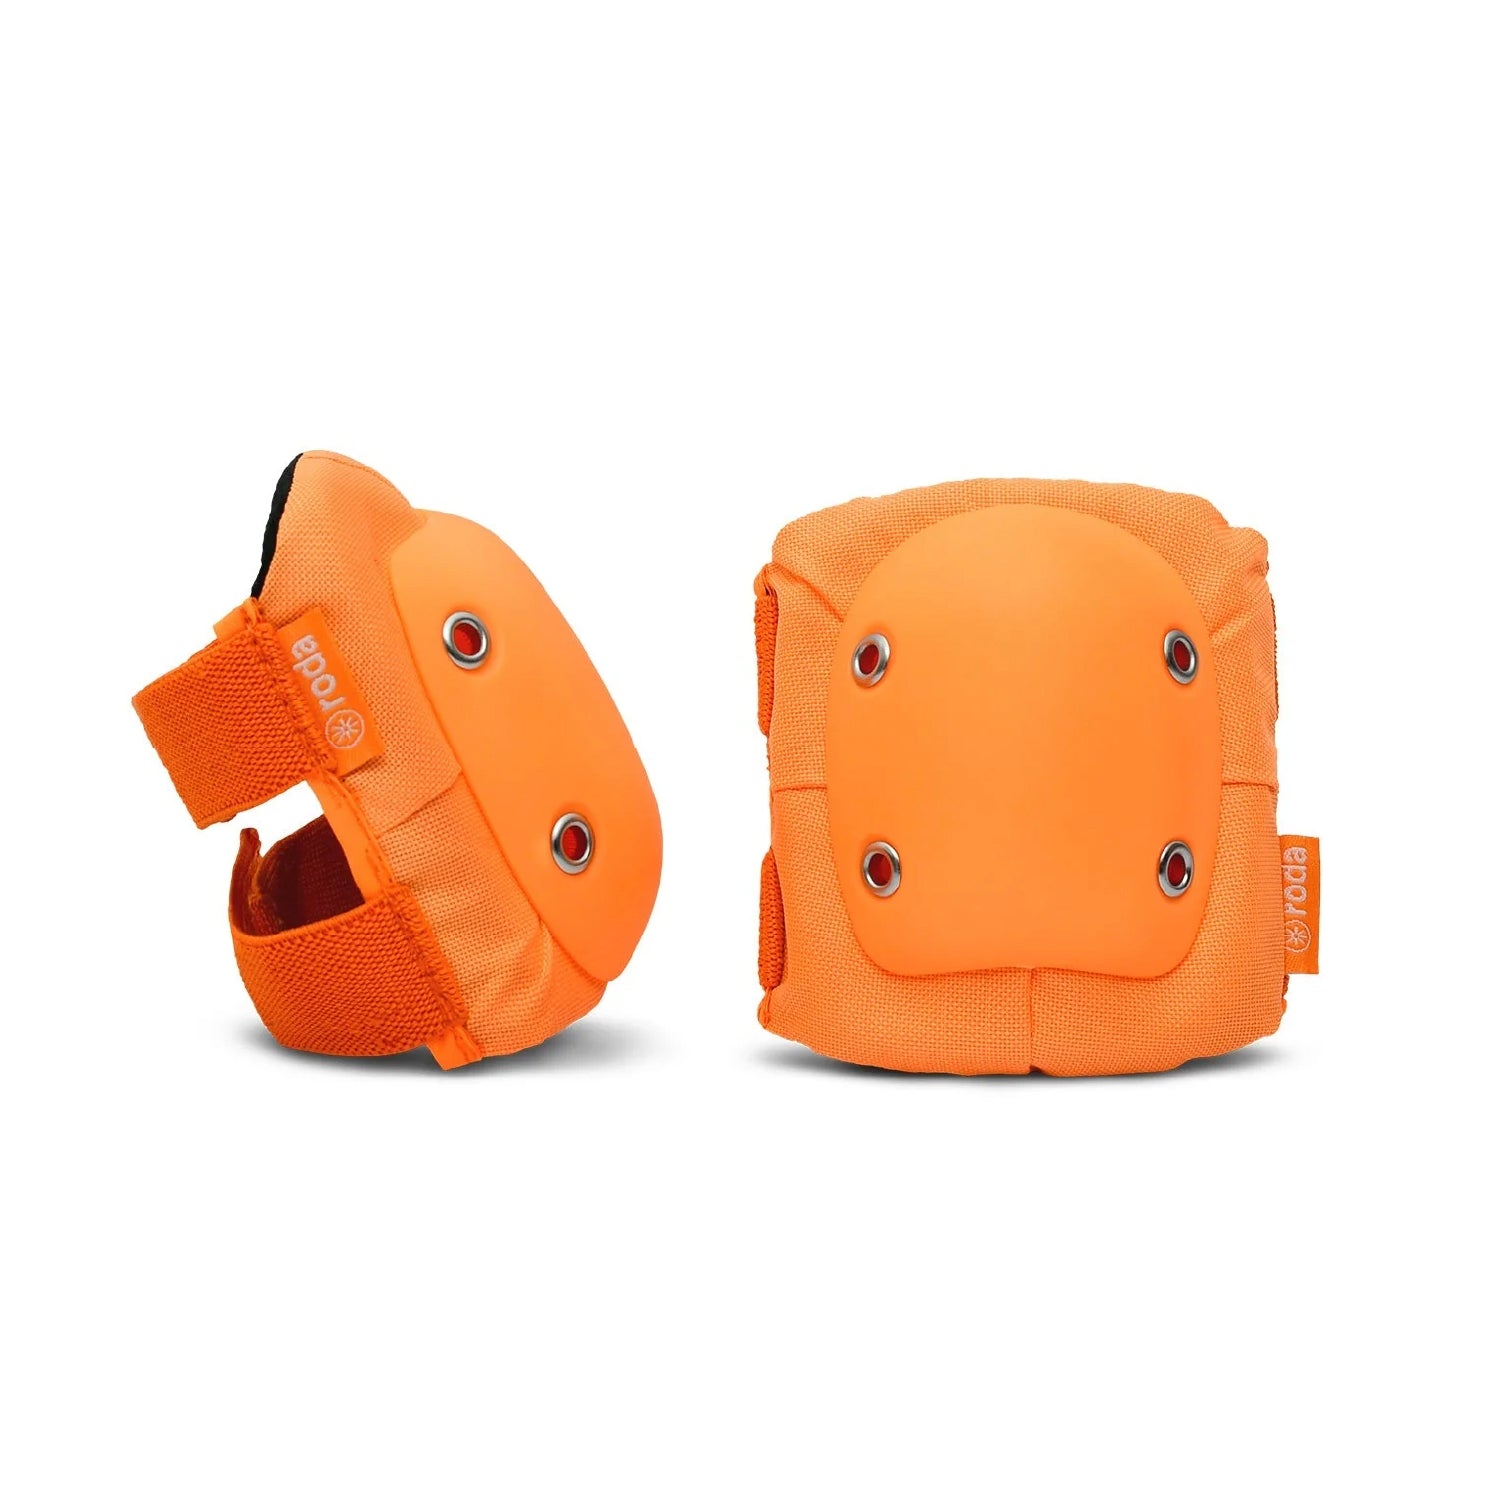 Kit protectores naranja